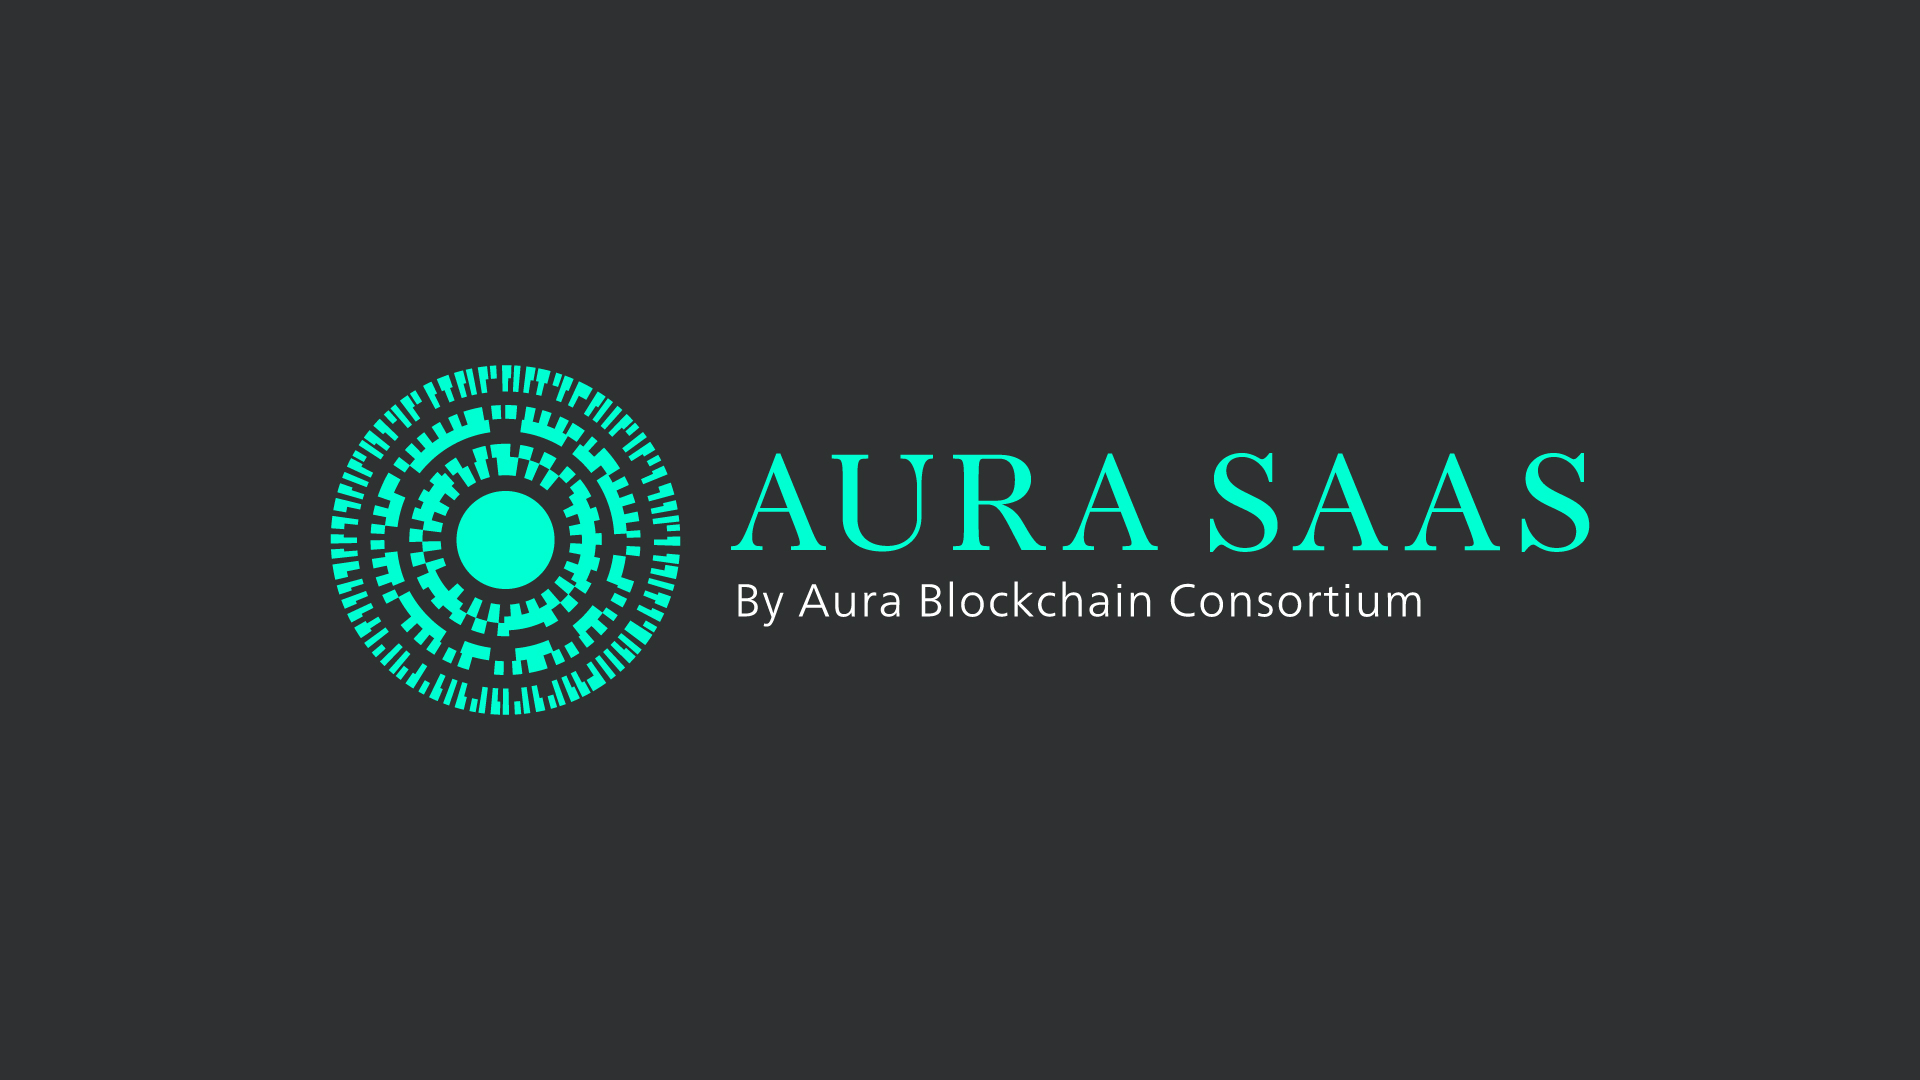 Aura SAAS logo